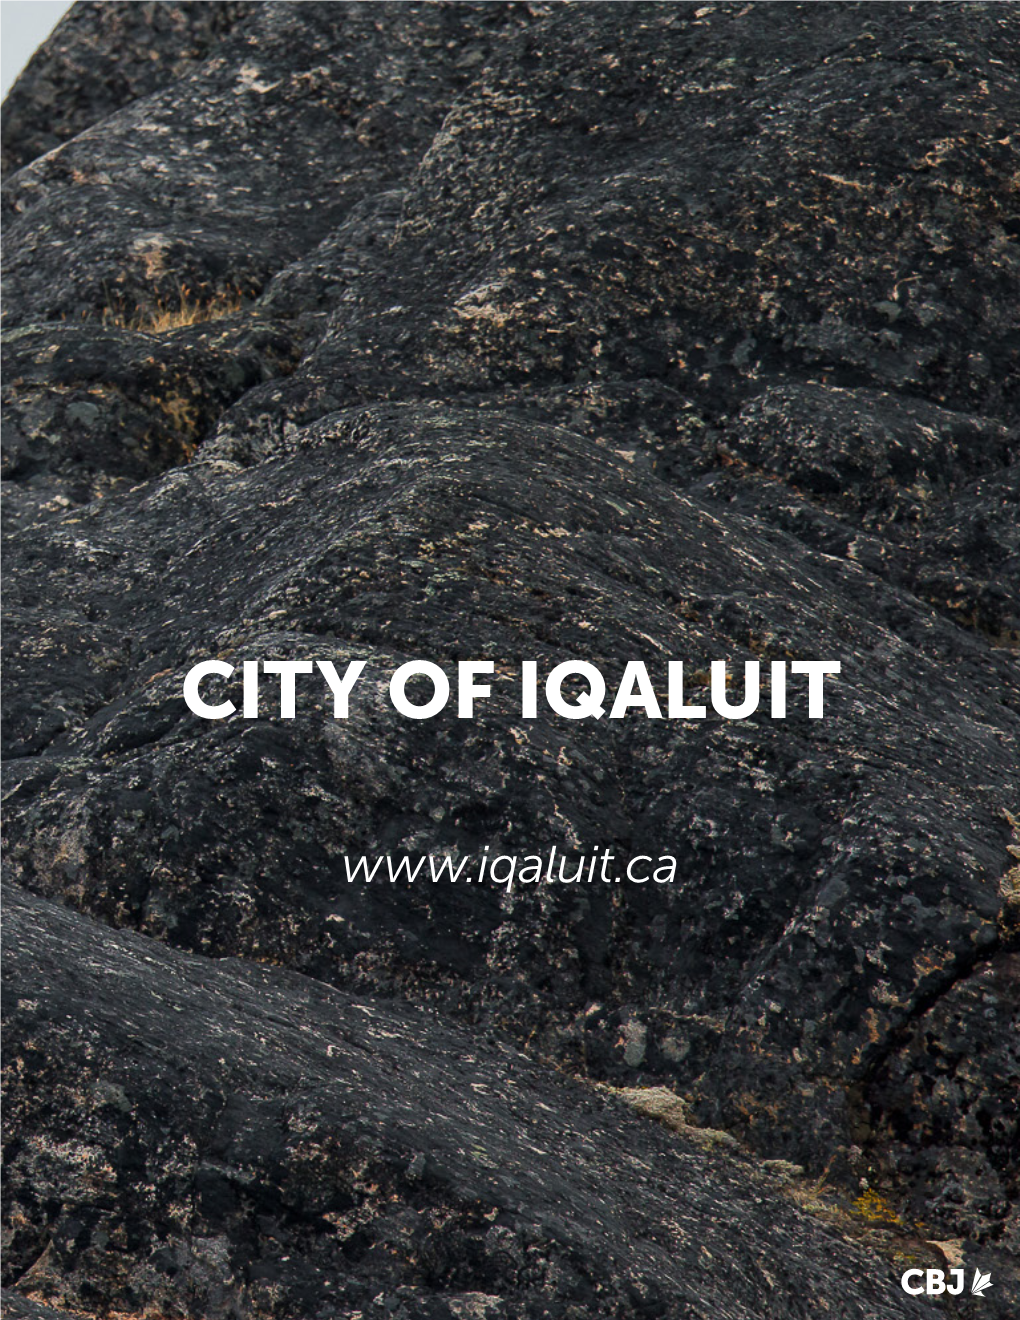 City of Iqaluit